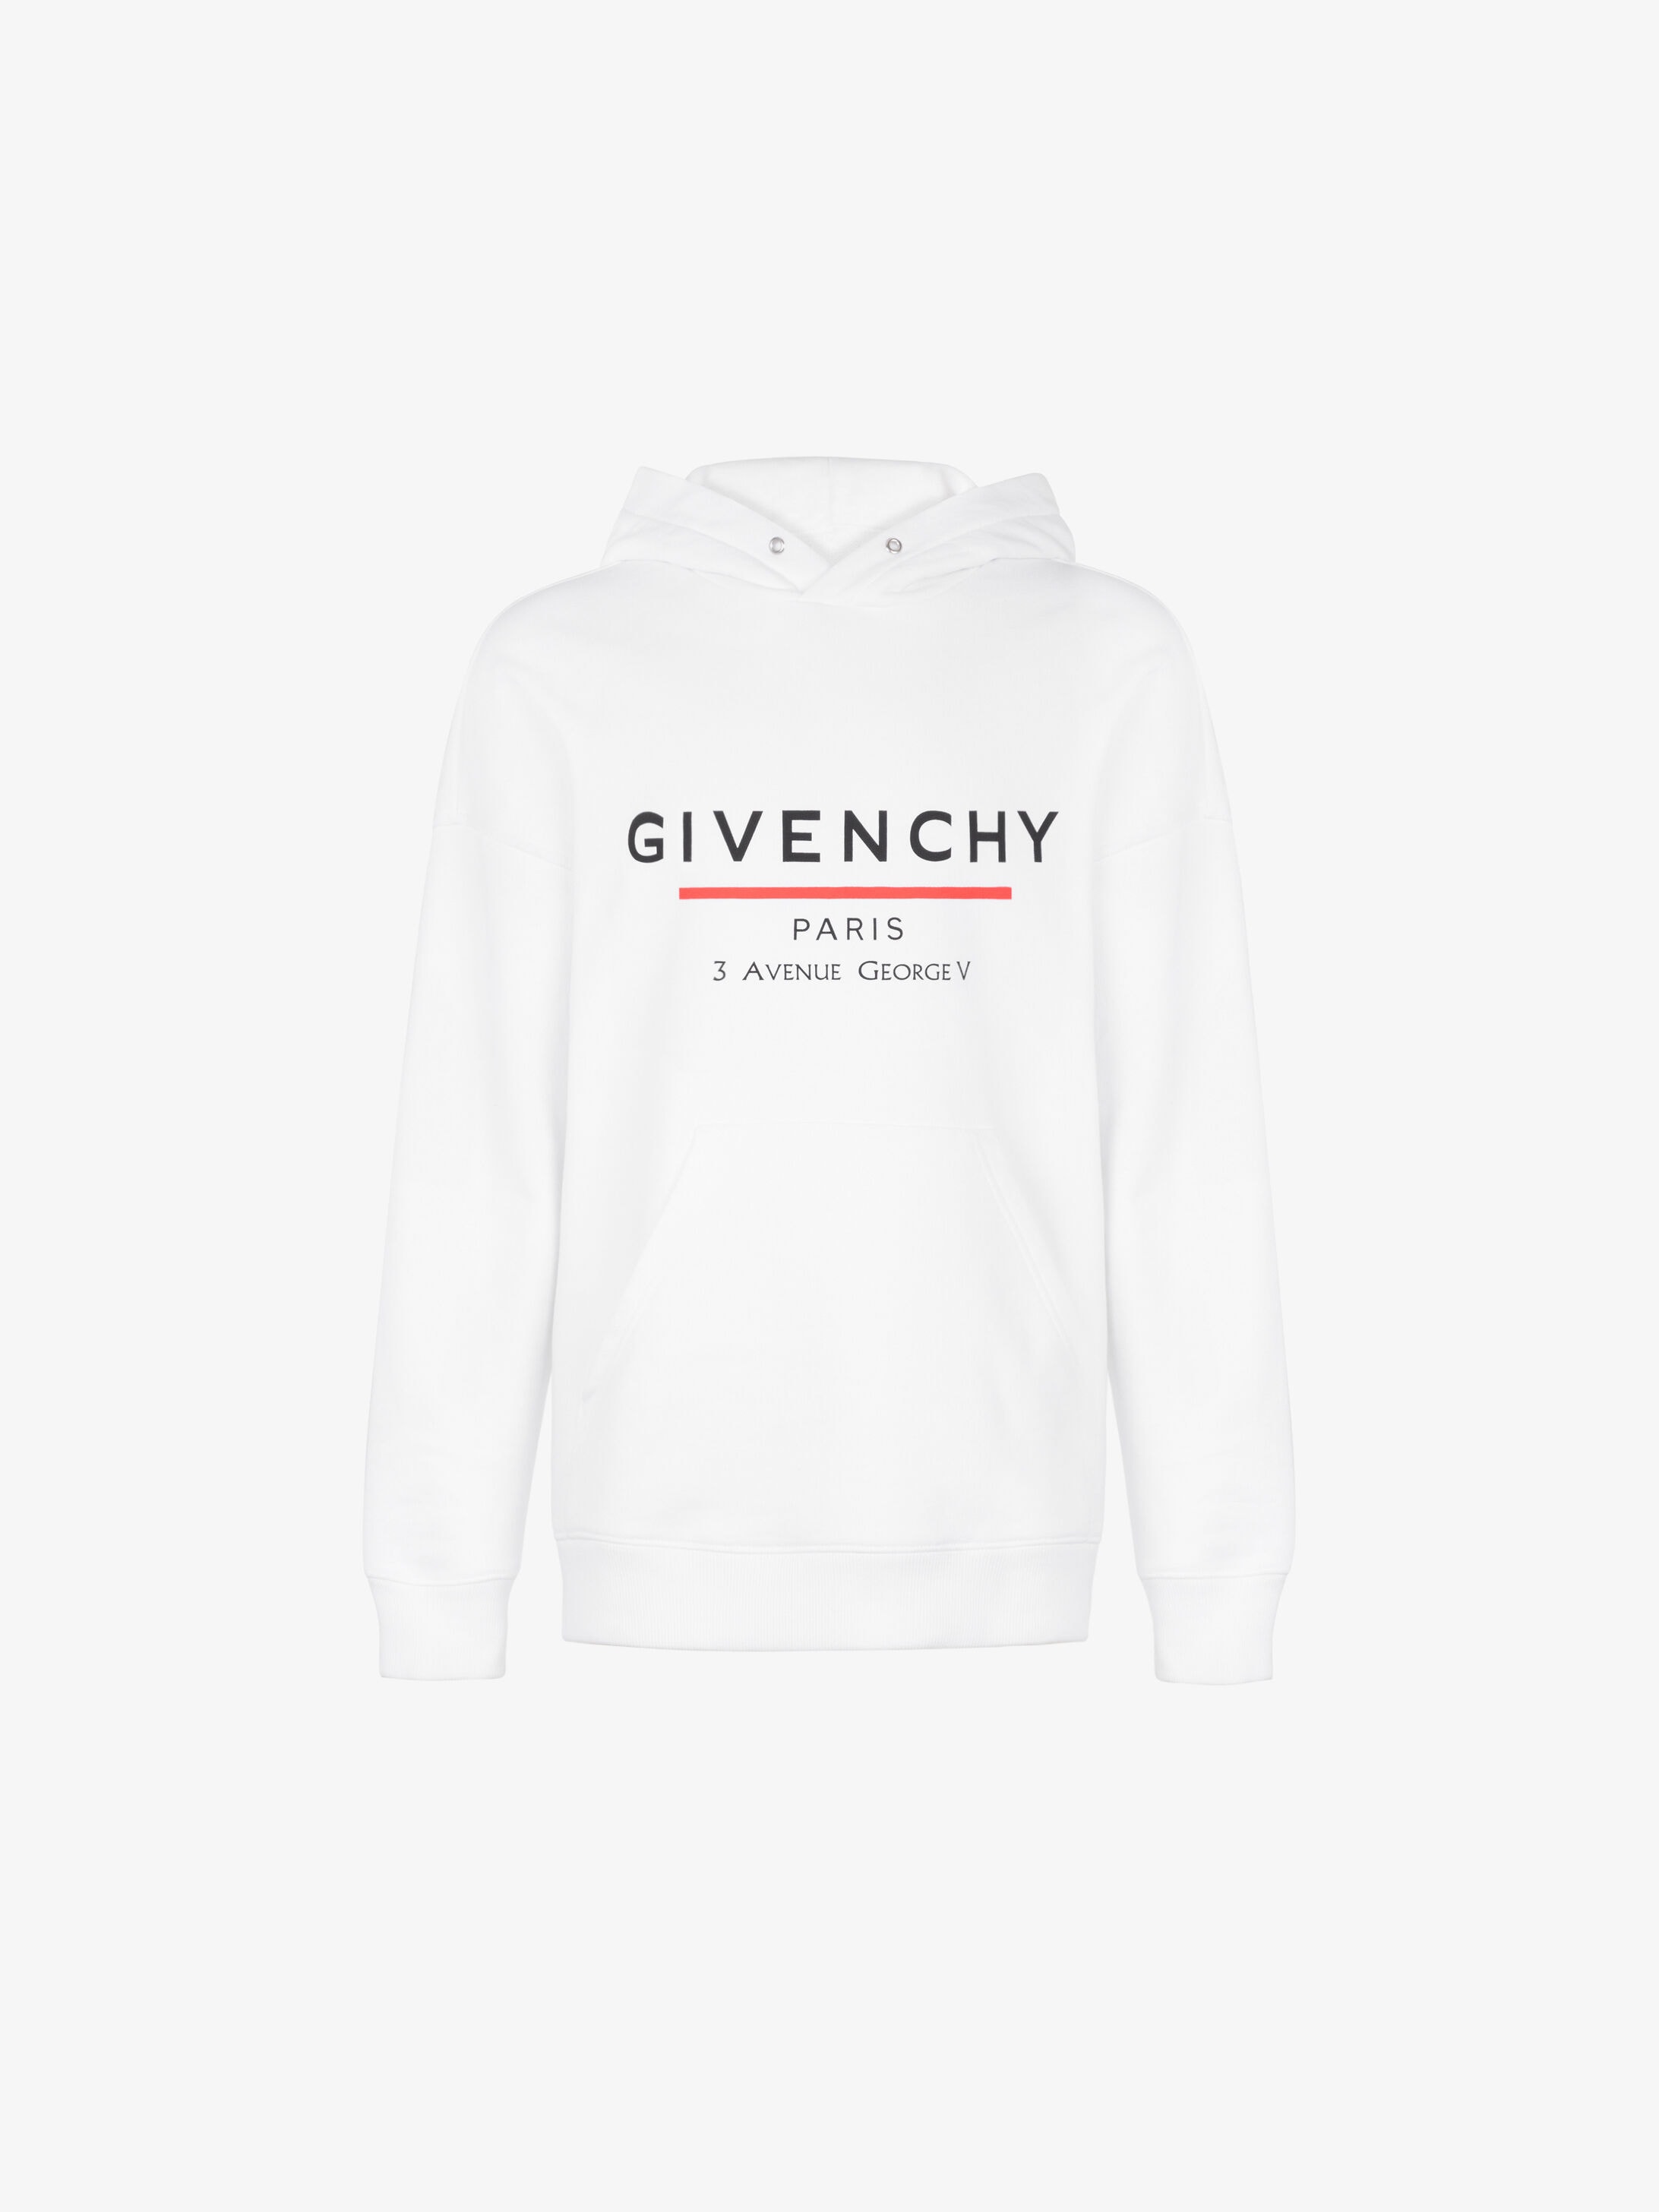 givenchy paris hoodie women's